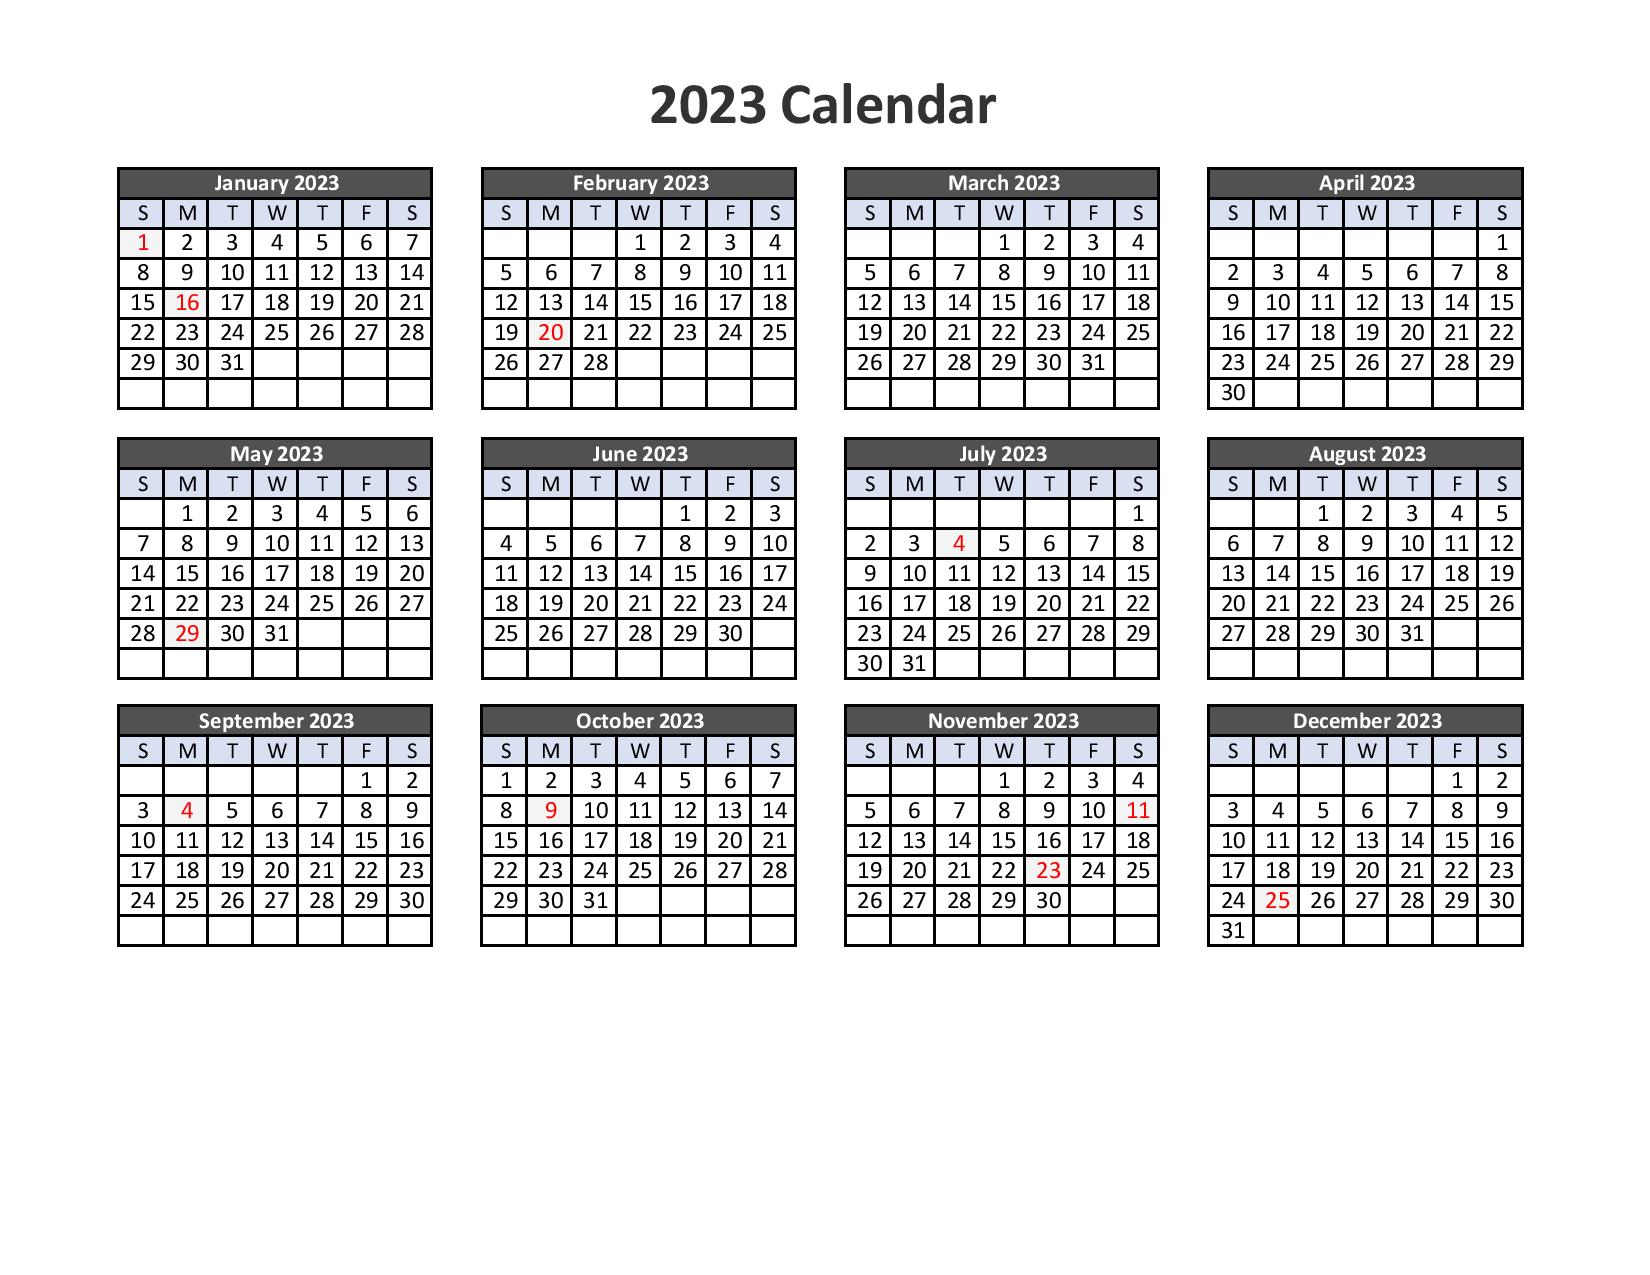 free-2023-calendar-template-download-in-word-illustrator-psd